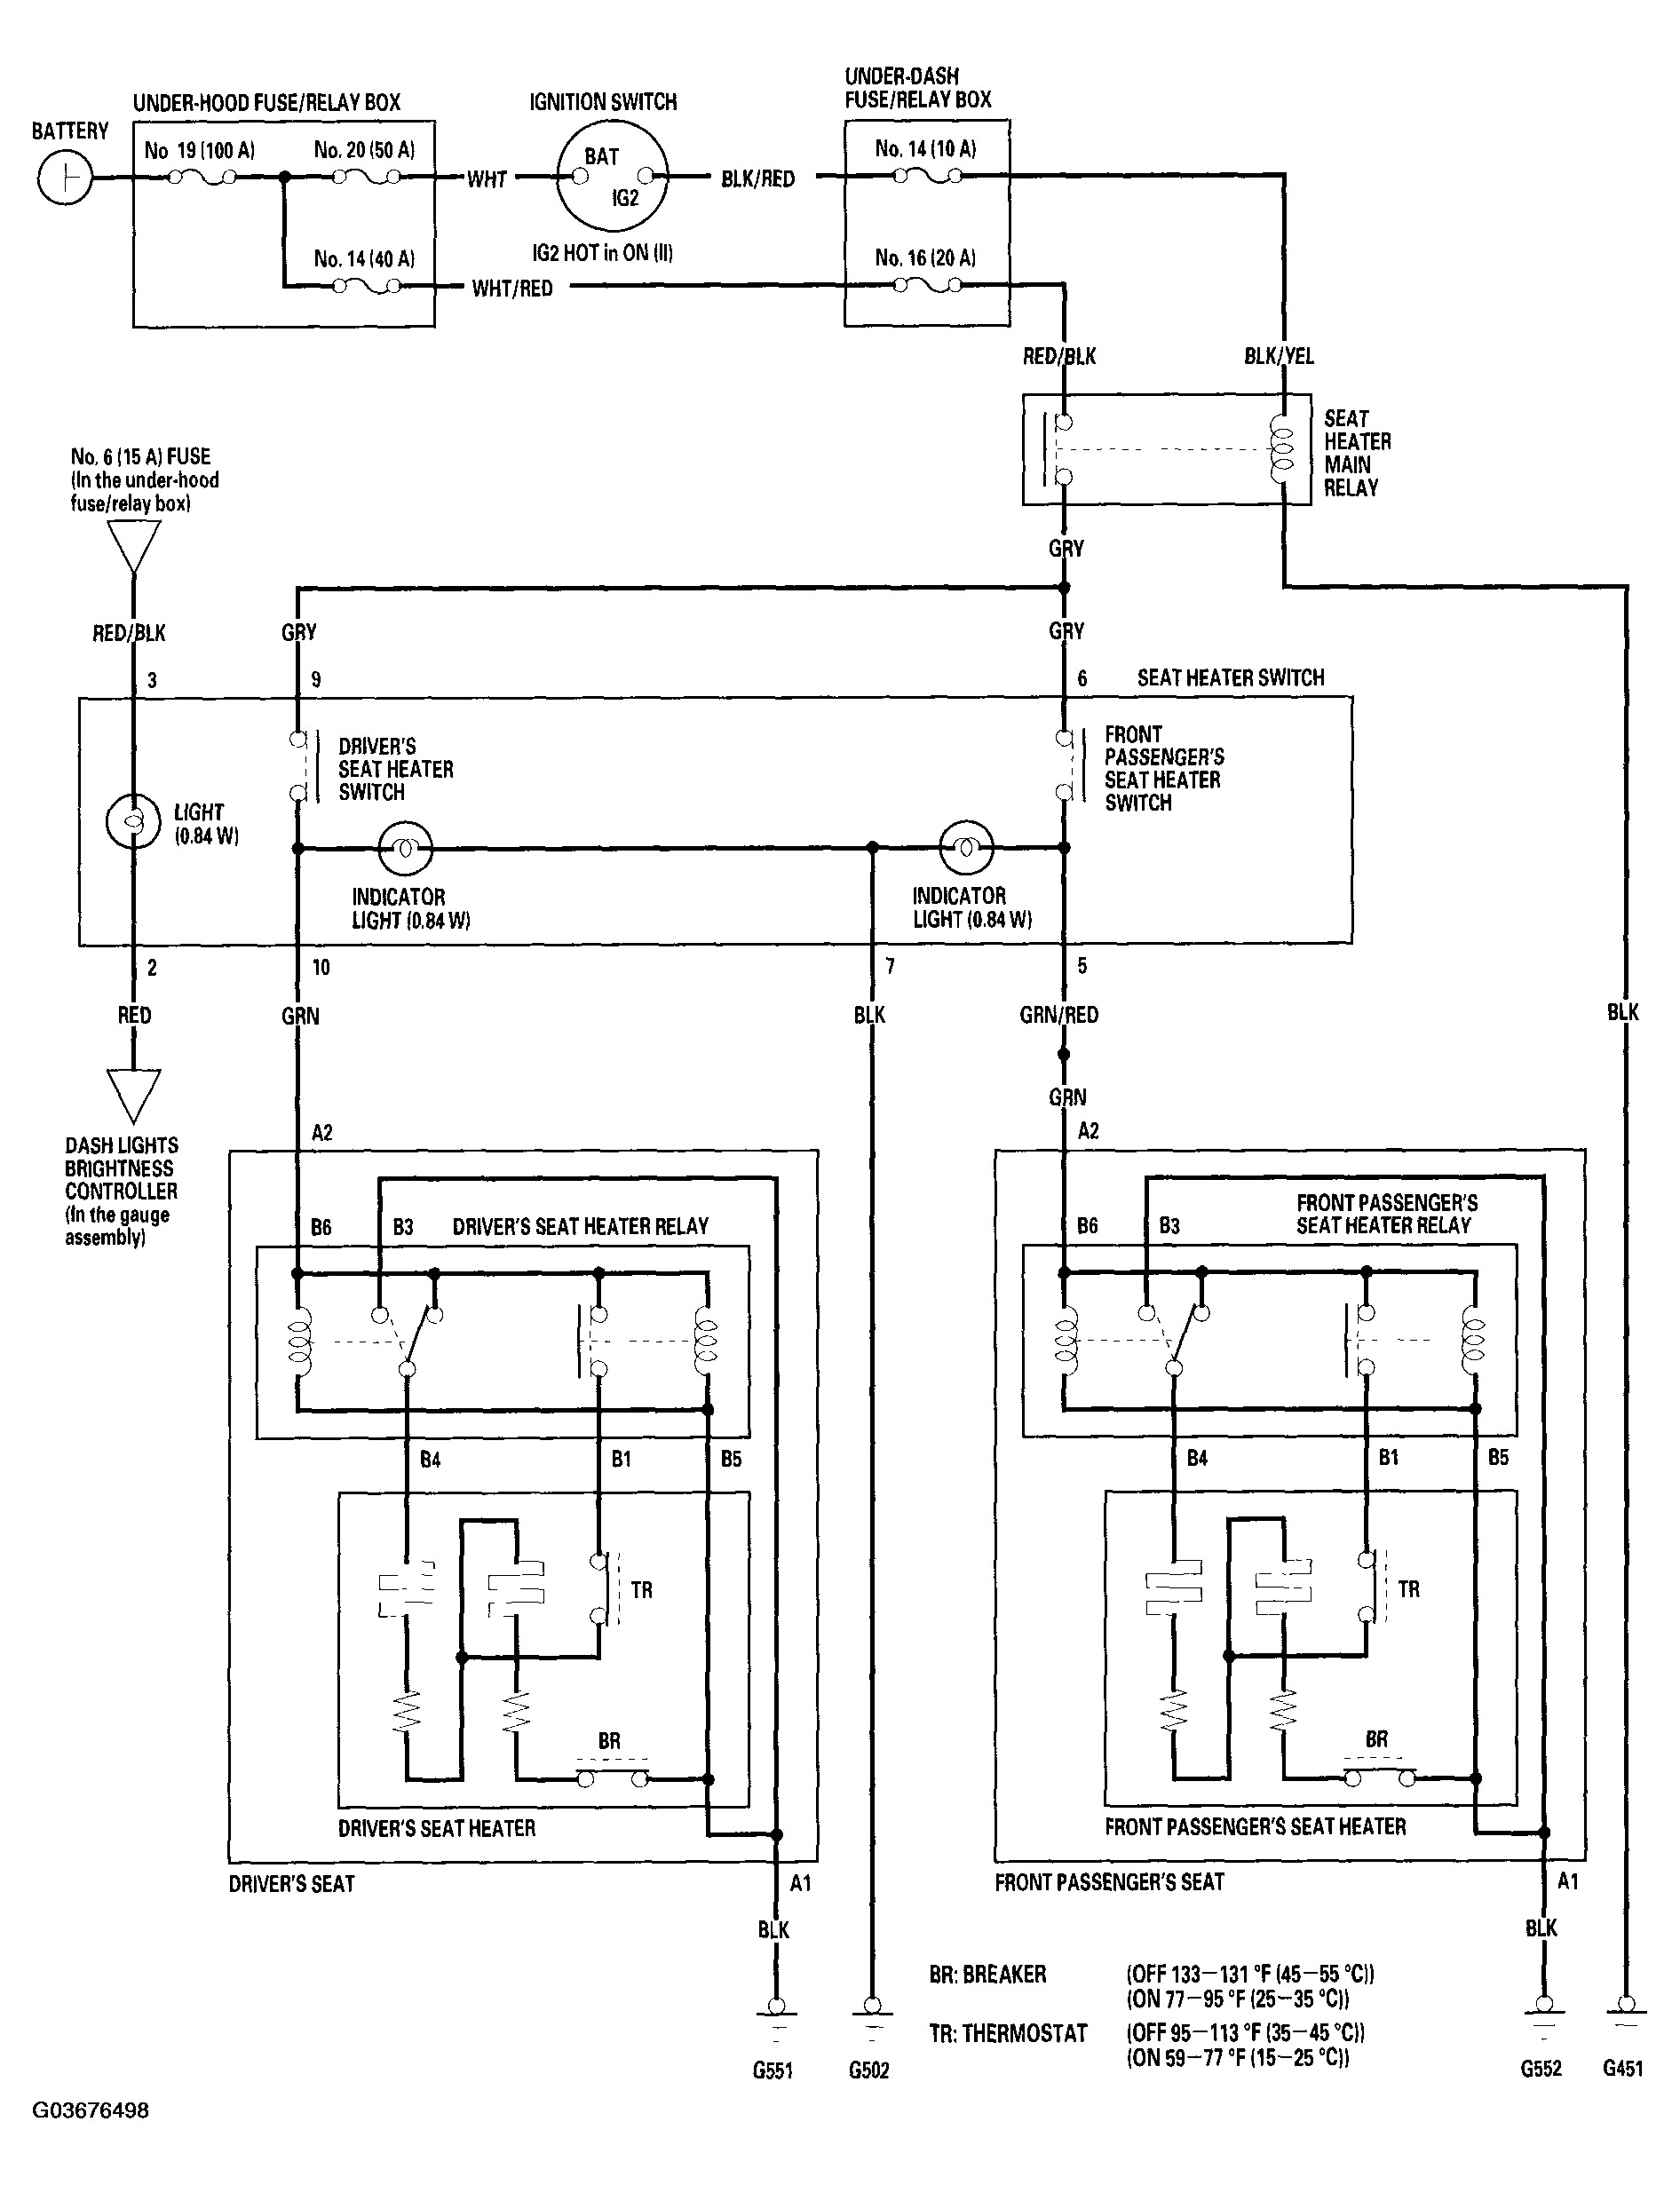 1998 Honda Accord Engine Diagram Honda Cr V Radio Wiring Diagram Additionally 2007 Honda Cr V Radio Of 1998 Honda Accord Engine Diagram